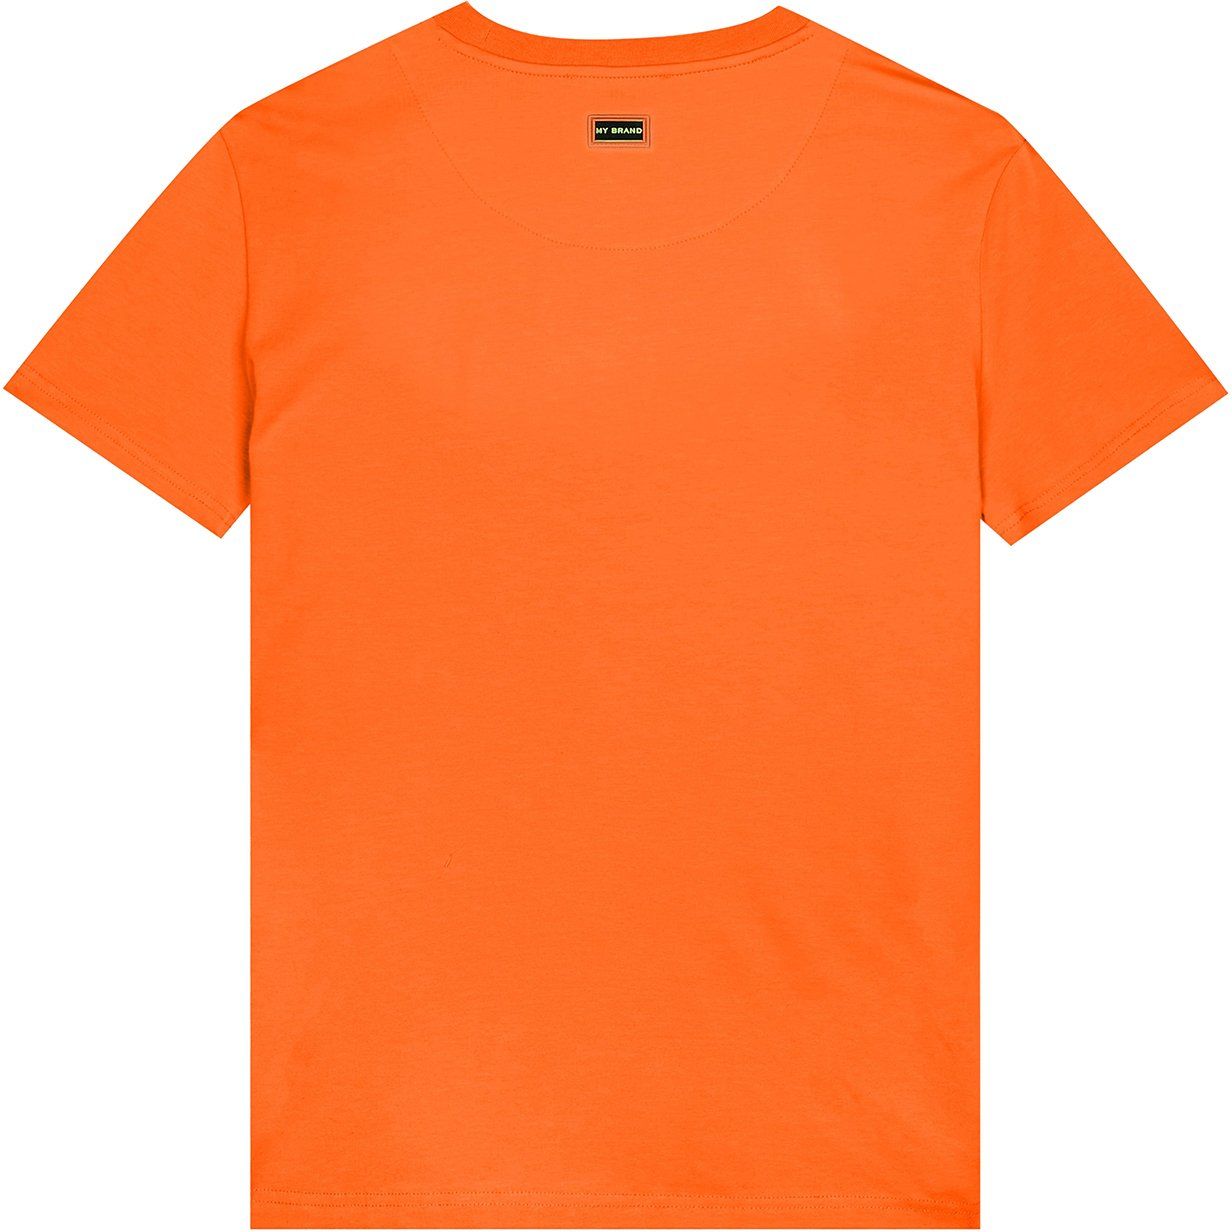 My Brand Mb double branding t shirt Oranje